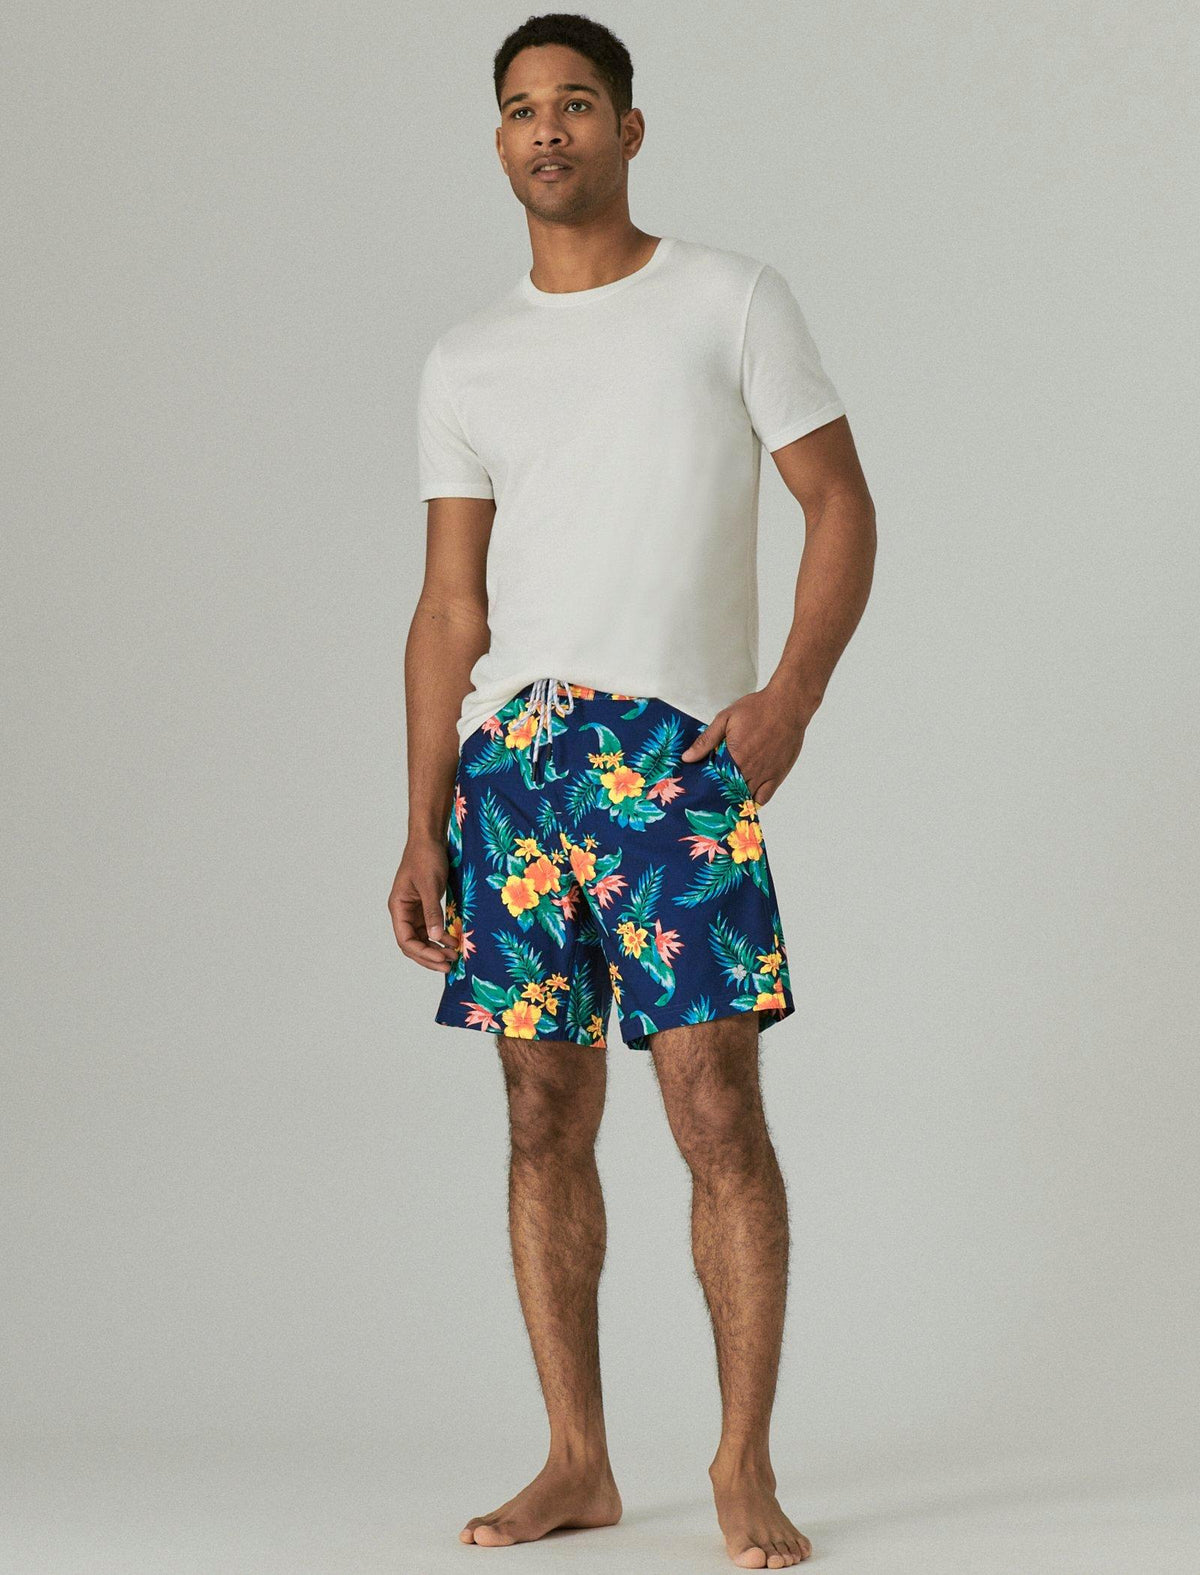 Lucky Brand 8" Stretch Board Short - Men's Shorts Denim Jean Navy Tropical Floral